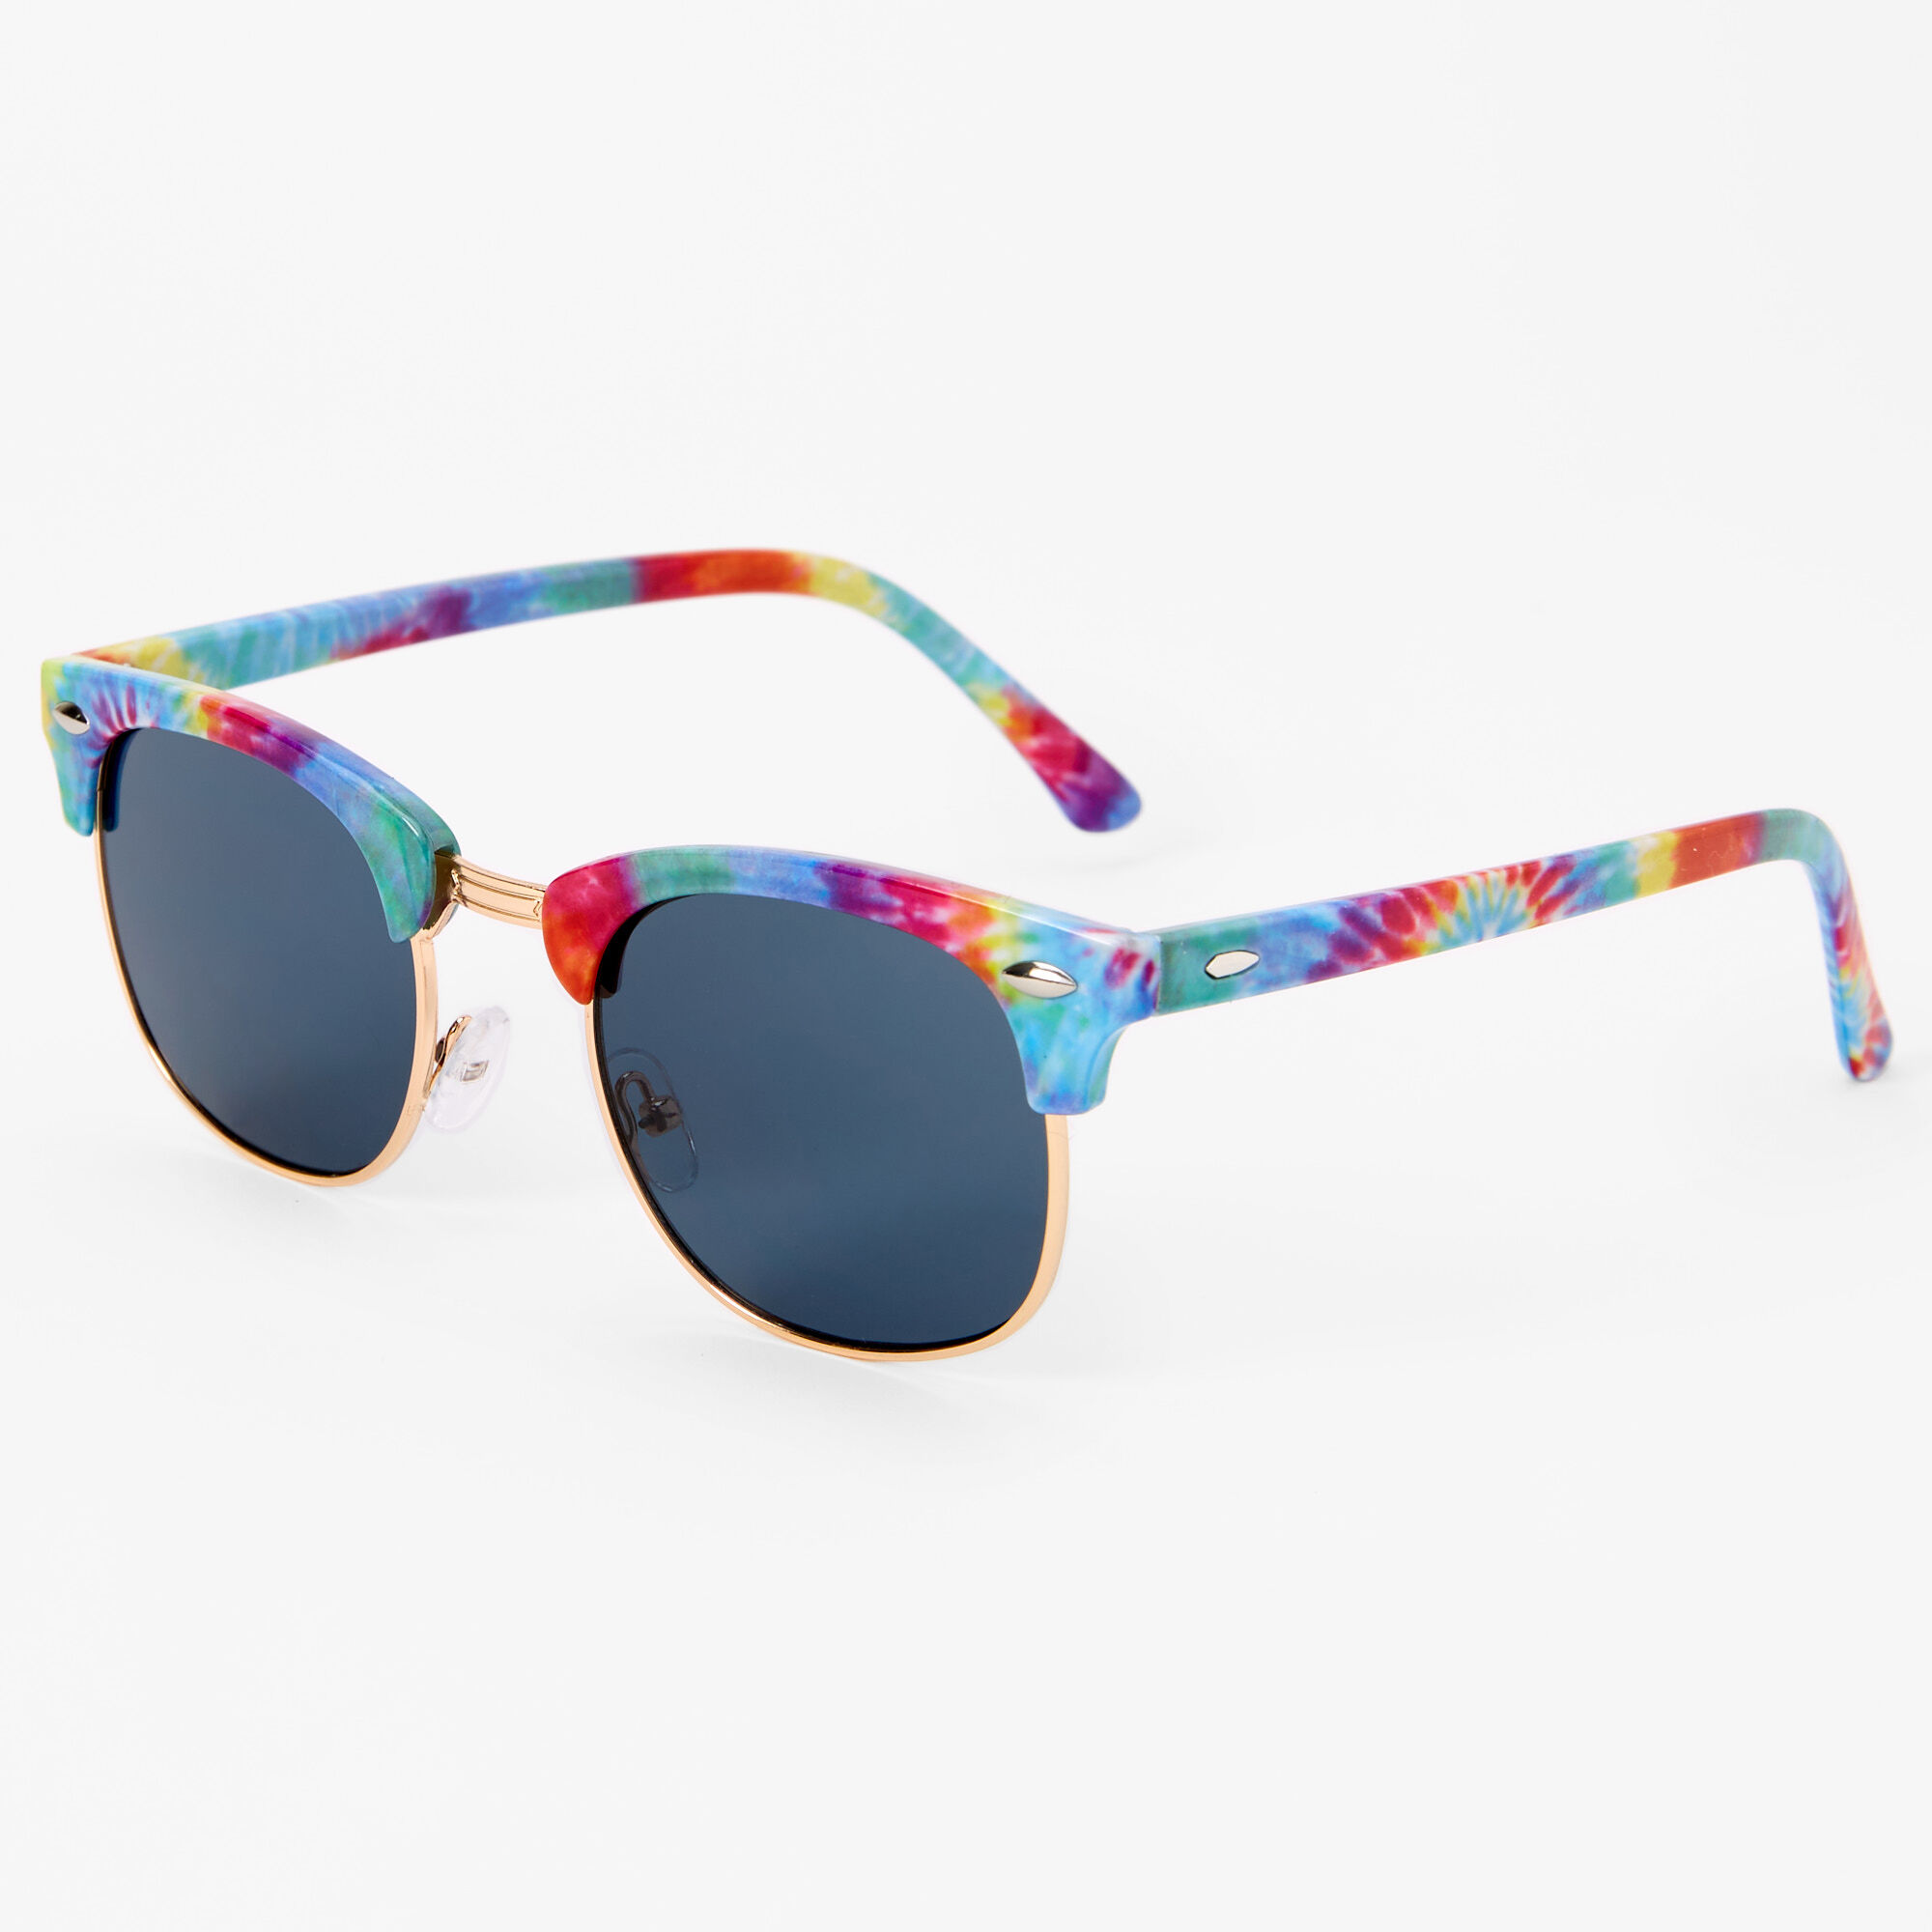 View Claires Bright Tie Dye Retro Sunglasses Rainbow information